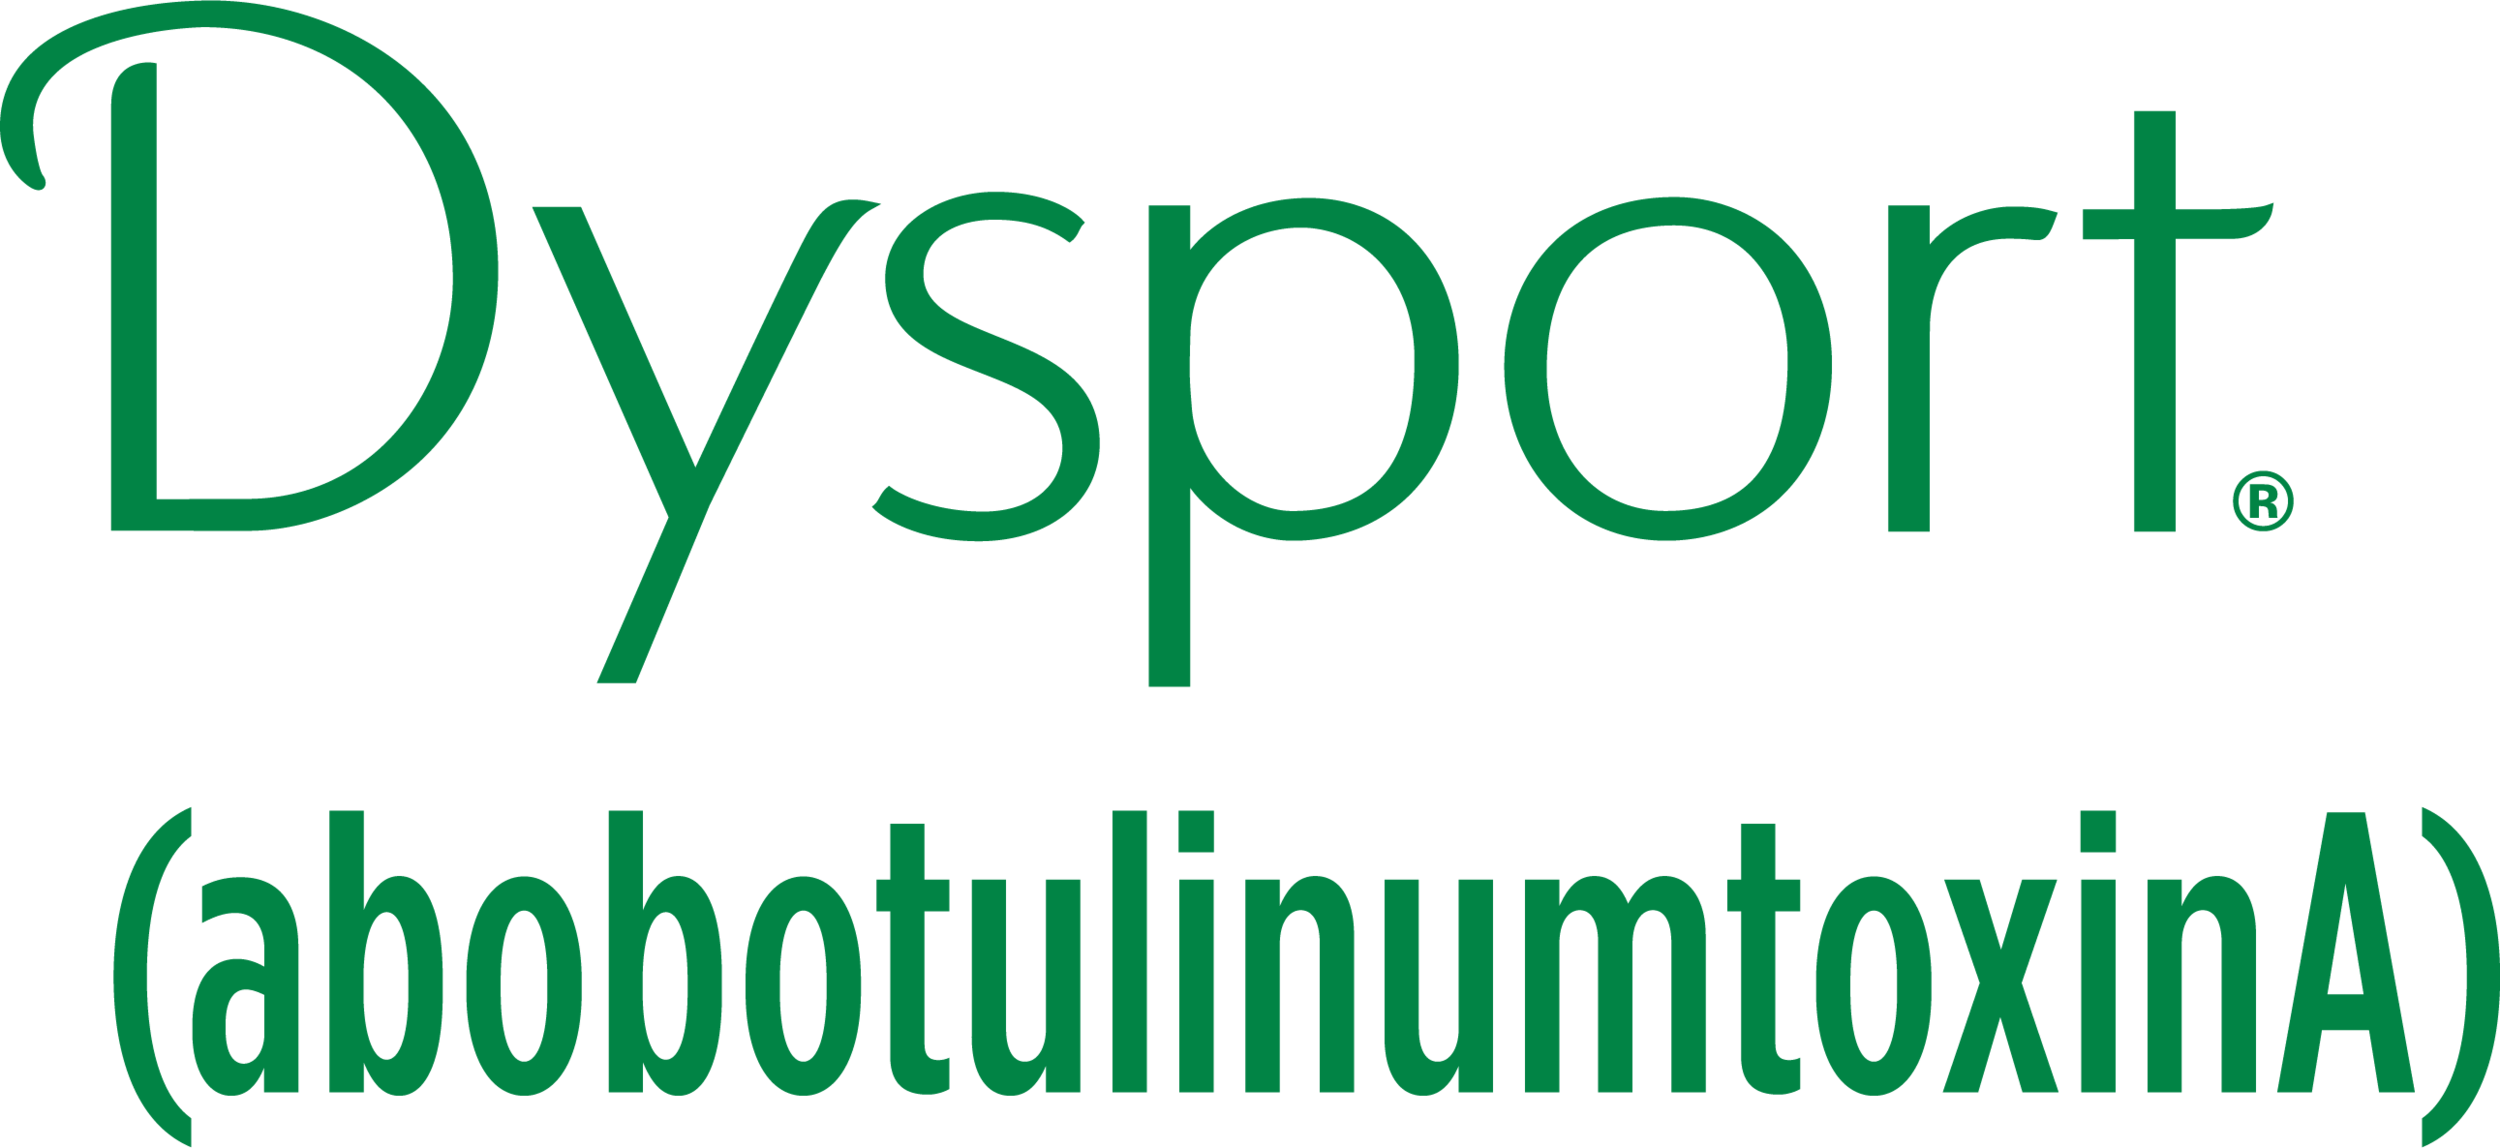 Dysport logo.png